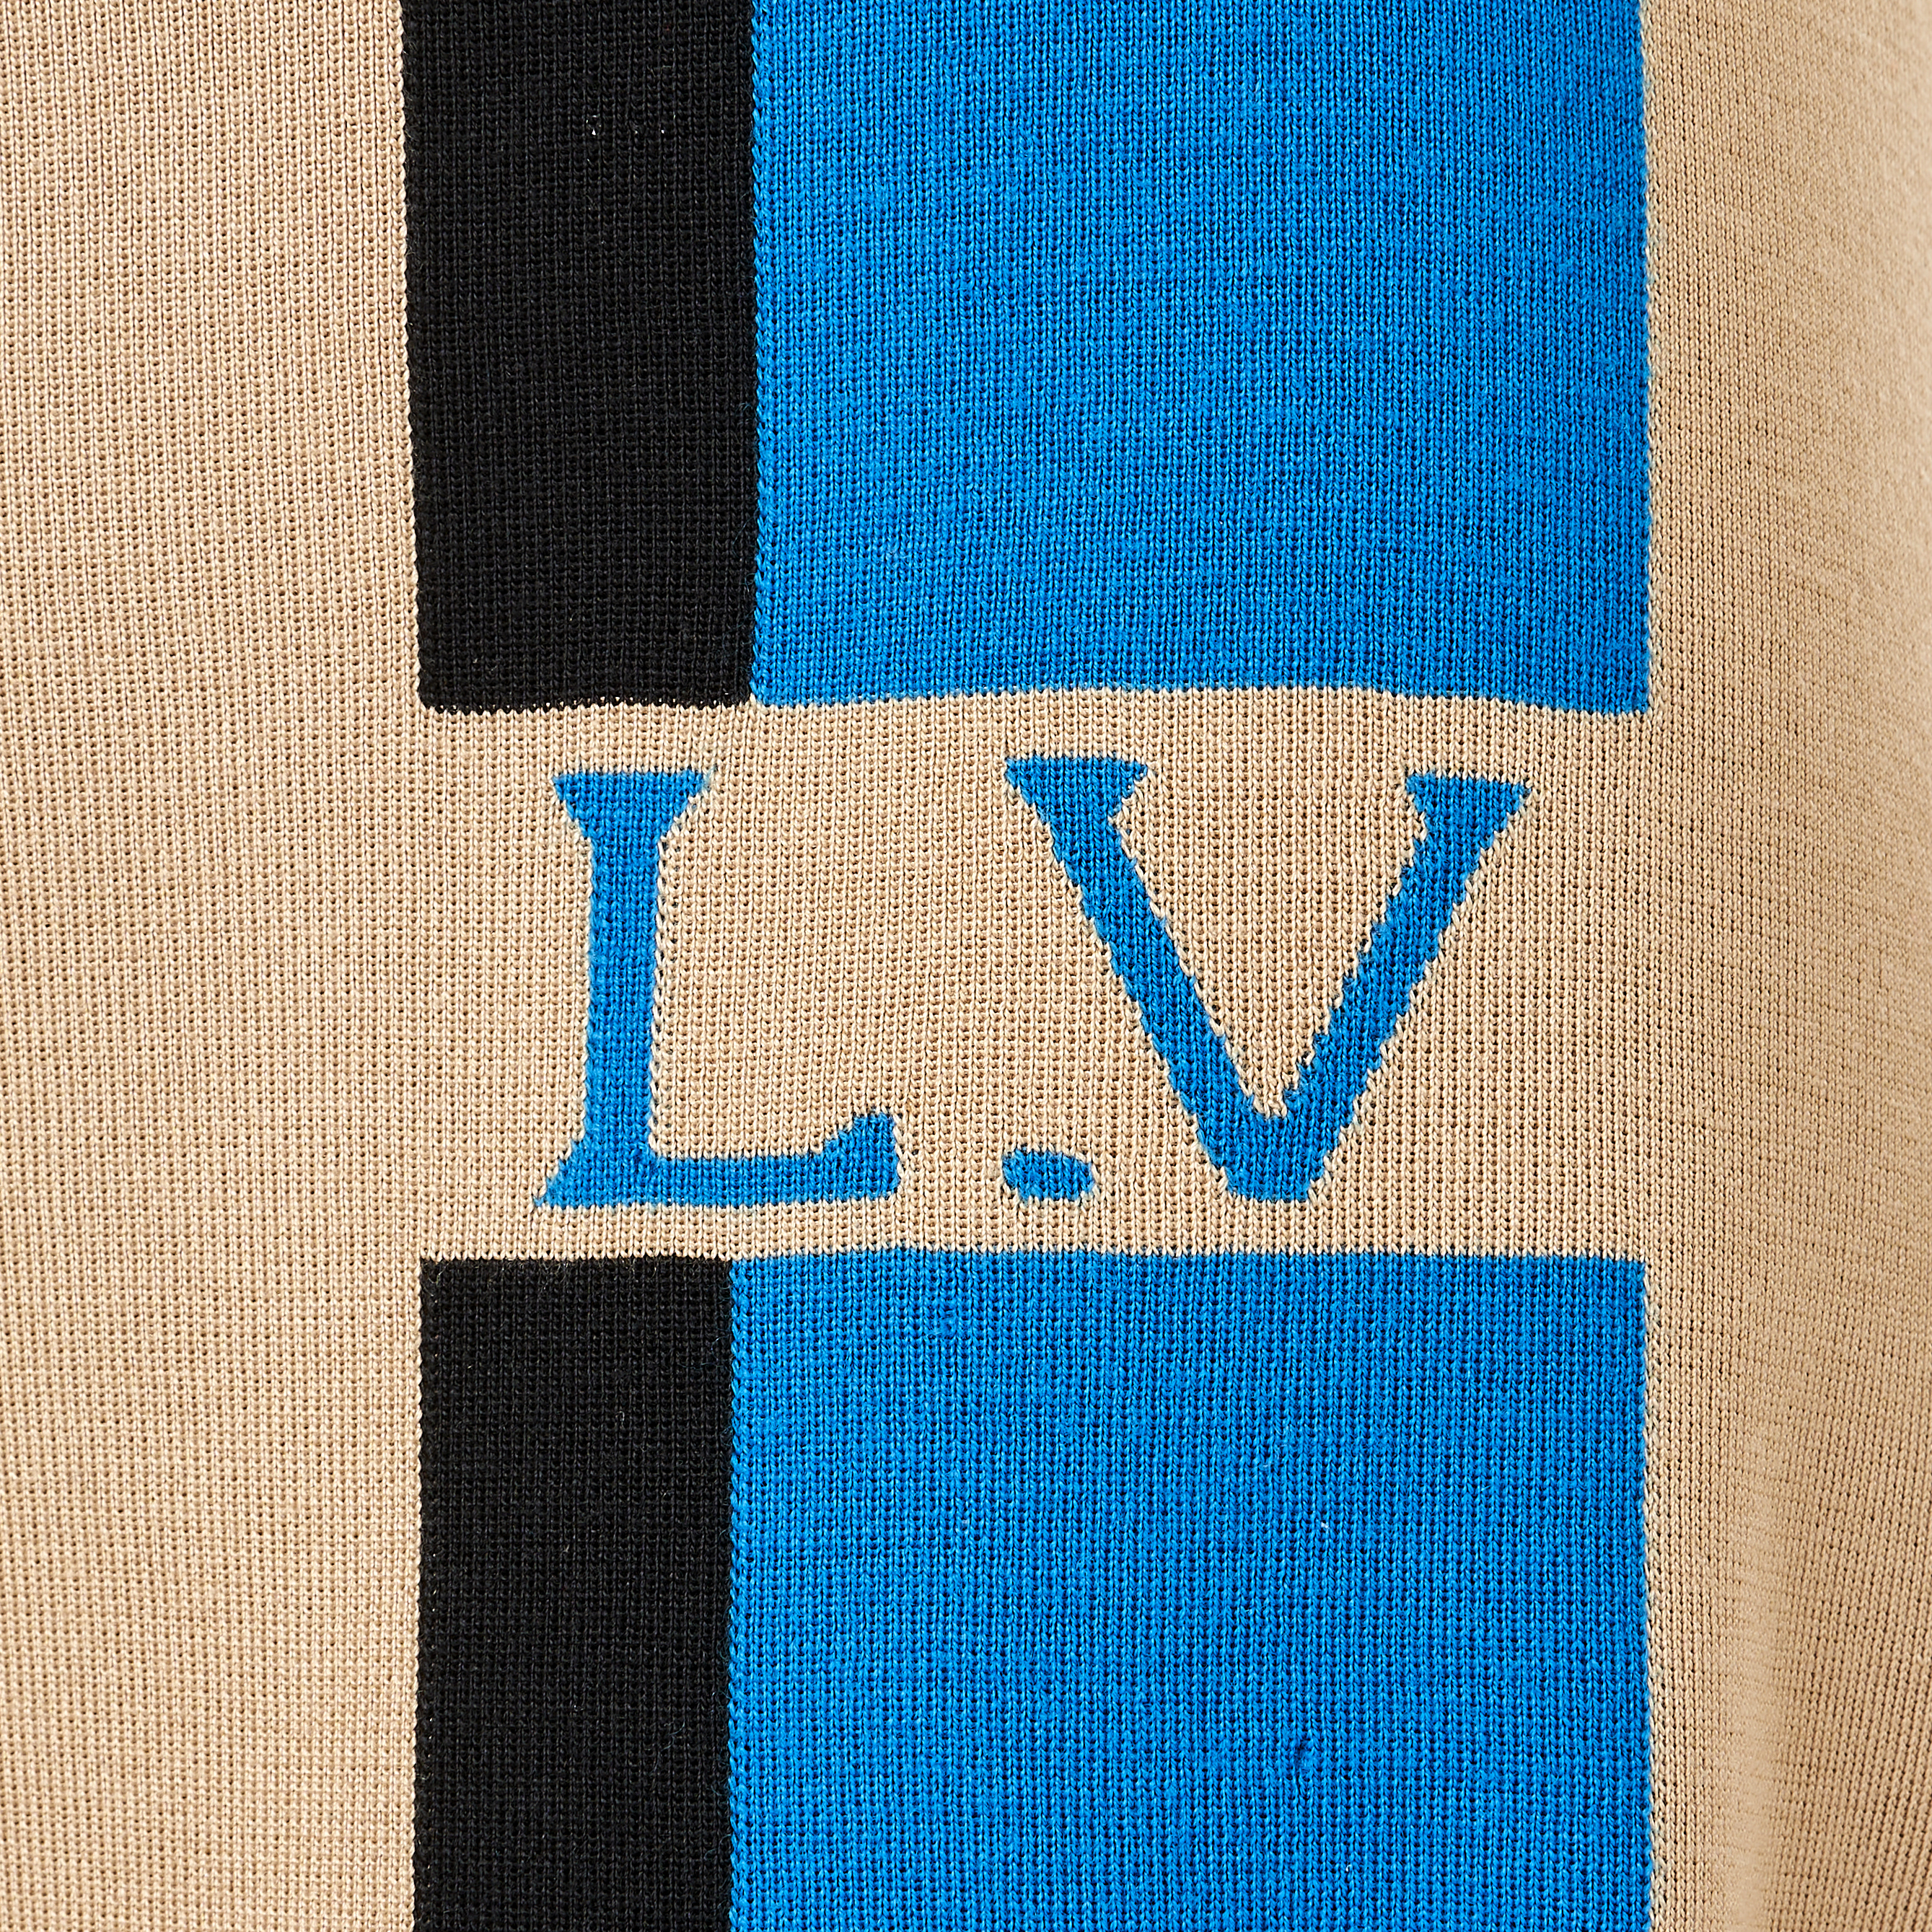 LOUIS VUITTON LOGO DRESS Condition grade B-. Size M. 80cm chest, 90cm length. Beige, blue, and ... - Image 3 of 3